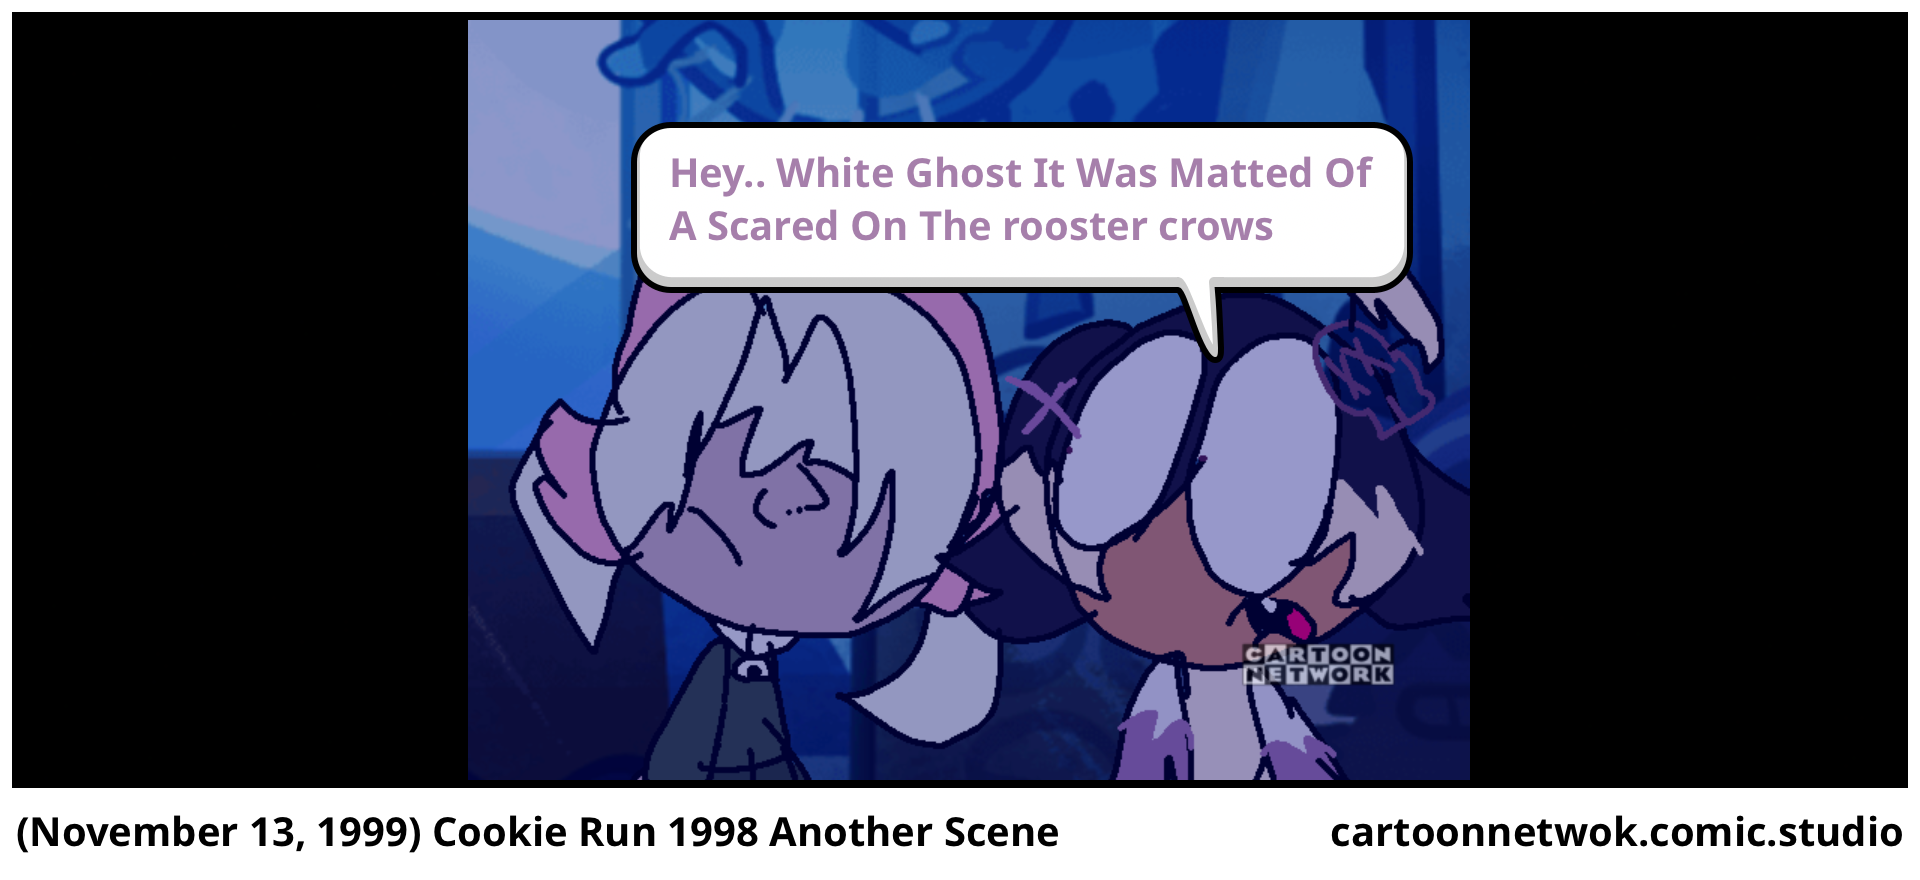 (November 13, 1999) Cookie Run 1998 Another Scene